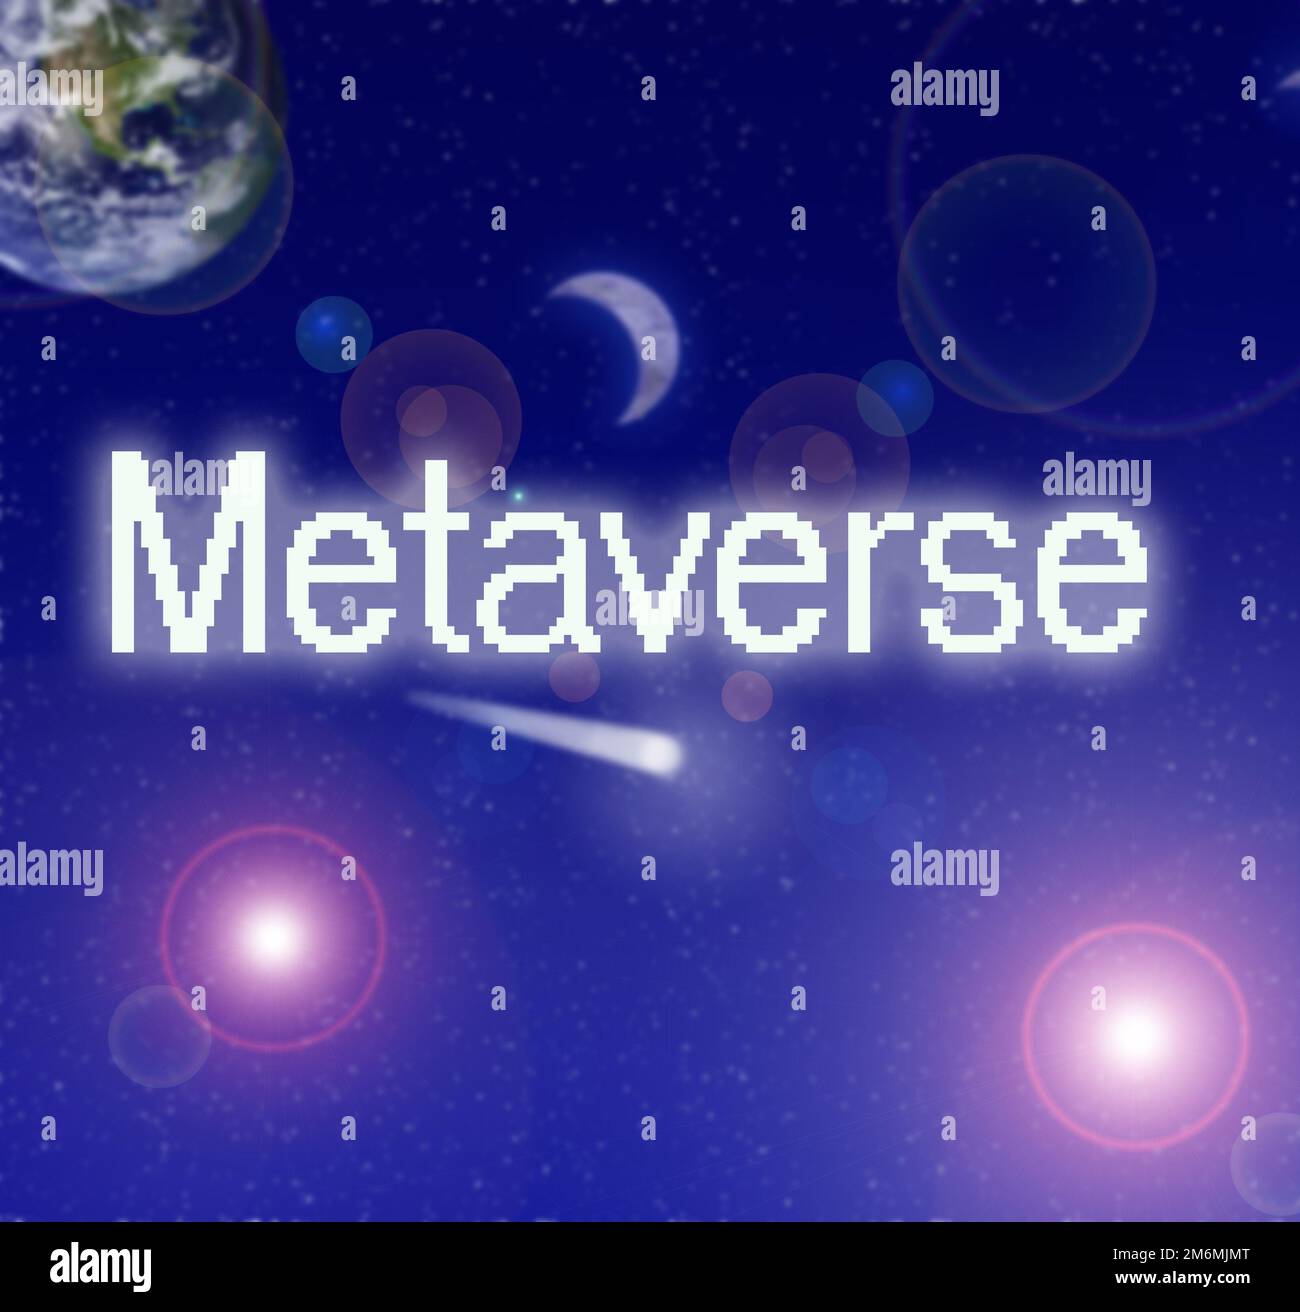 Metaverse text illustation on digital universe theme background -- virtual reality concept Stock Photo